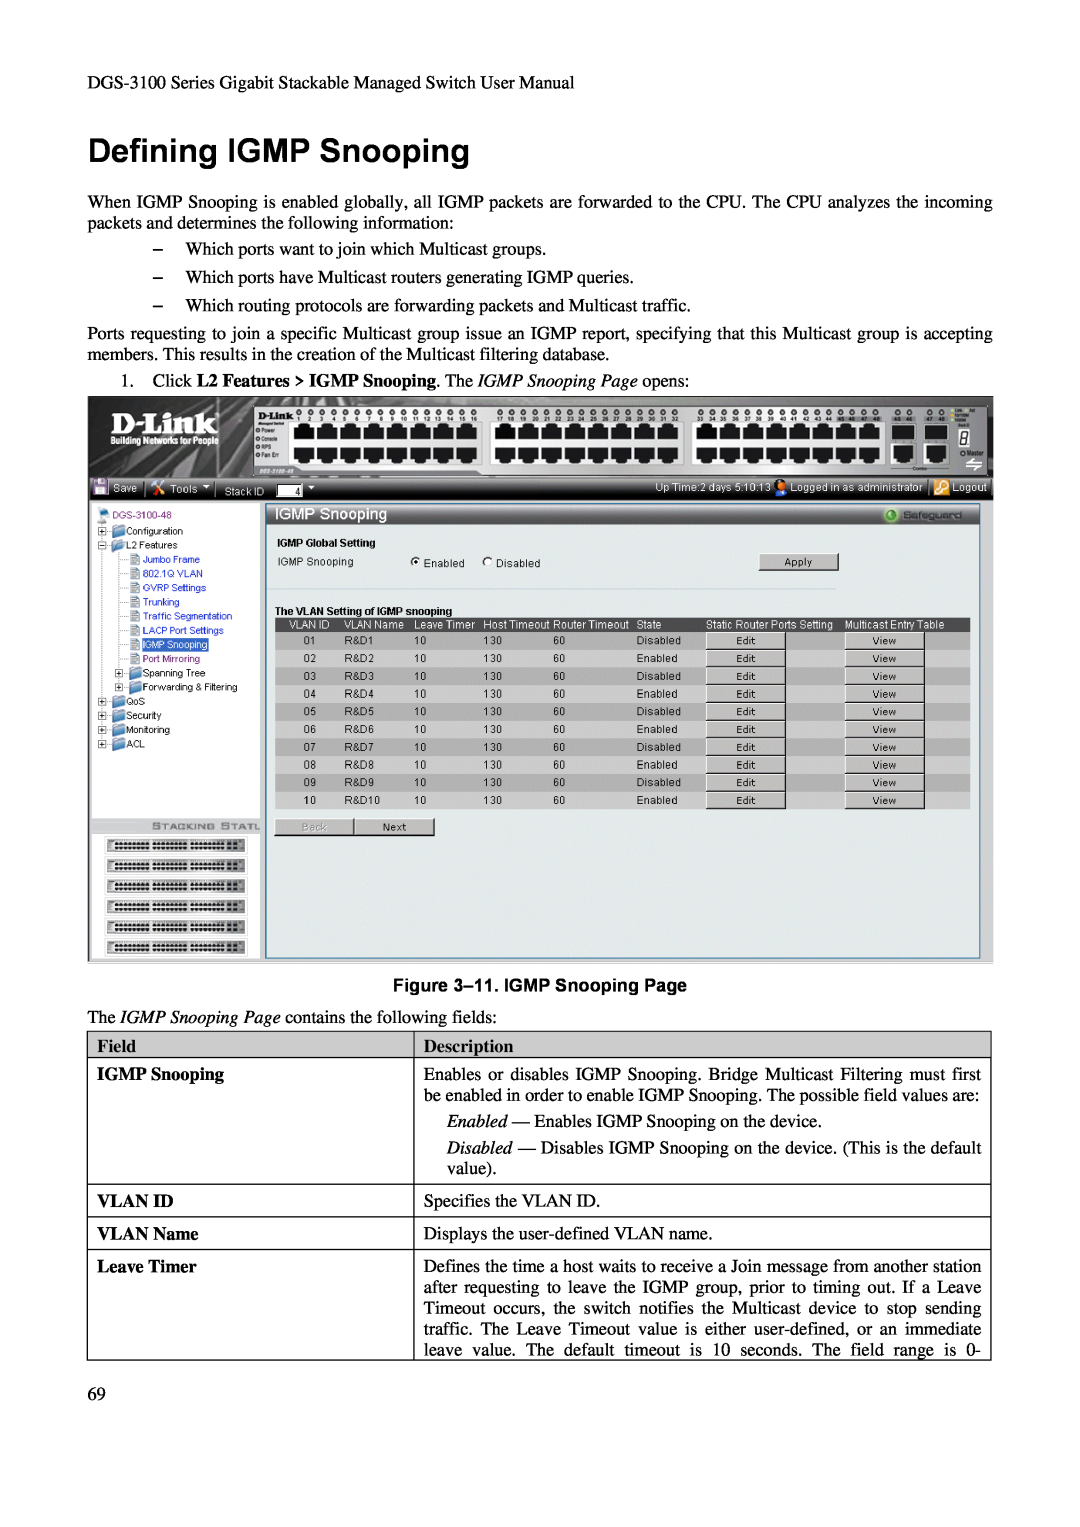 D-Link DGS-3100 Defining IGMP Snooping, Click L2 Features IGMP Snooping. The IGMP Snooping Page opens, Field, Description 